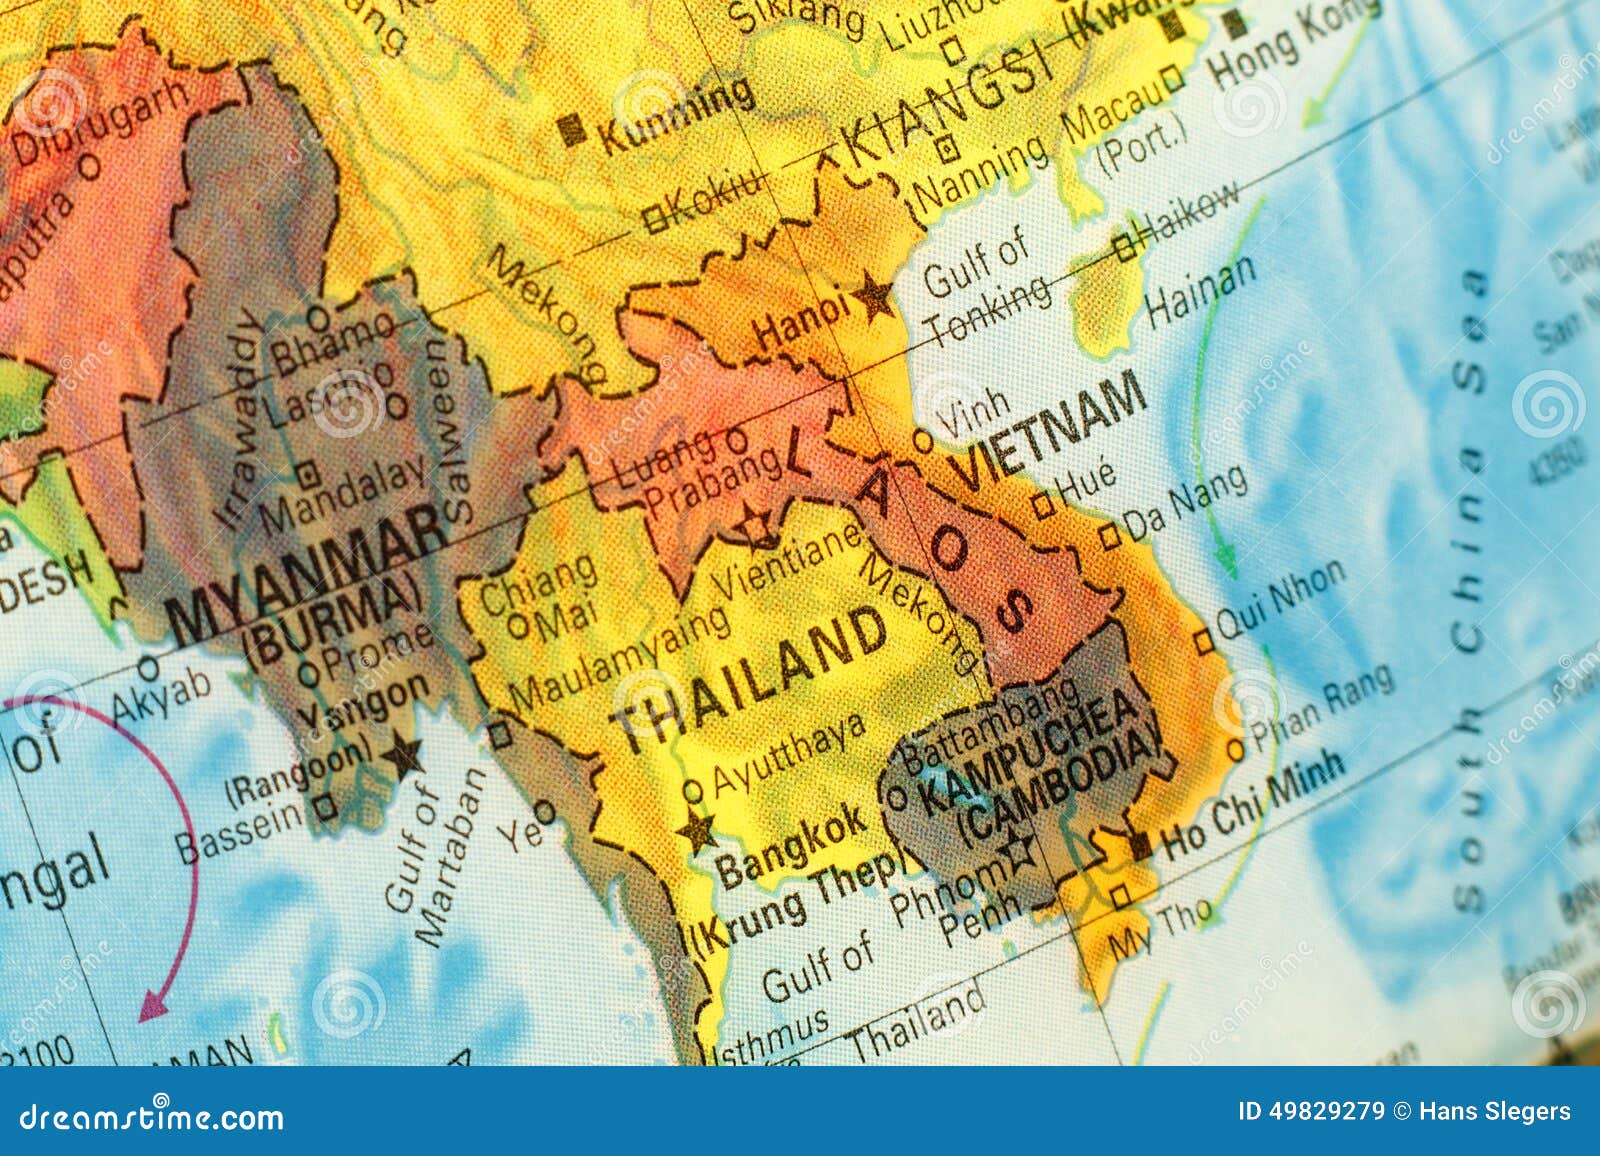 map of thailand,vietnam and laos. close-up image